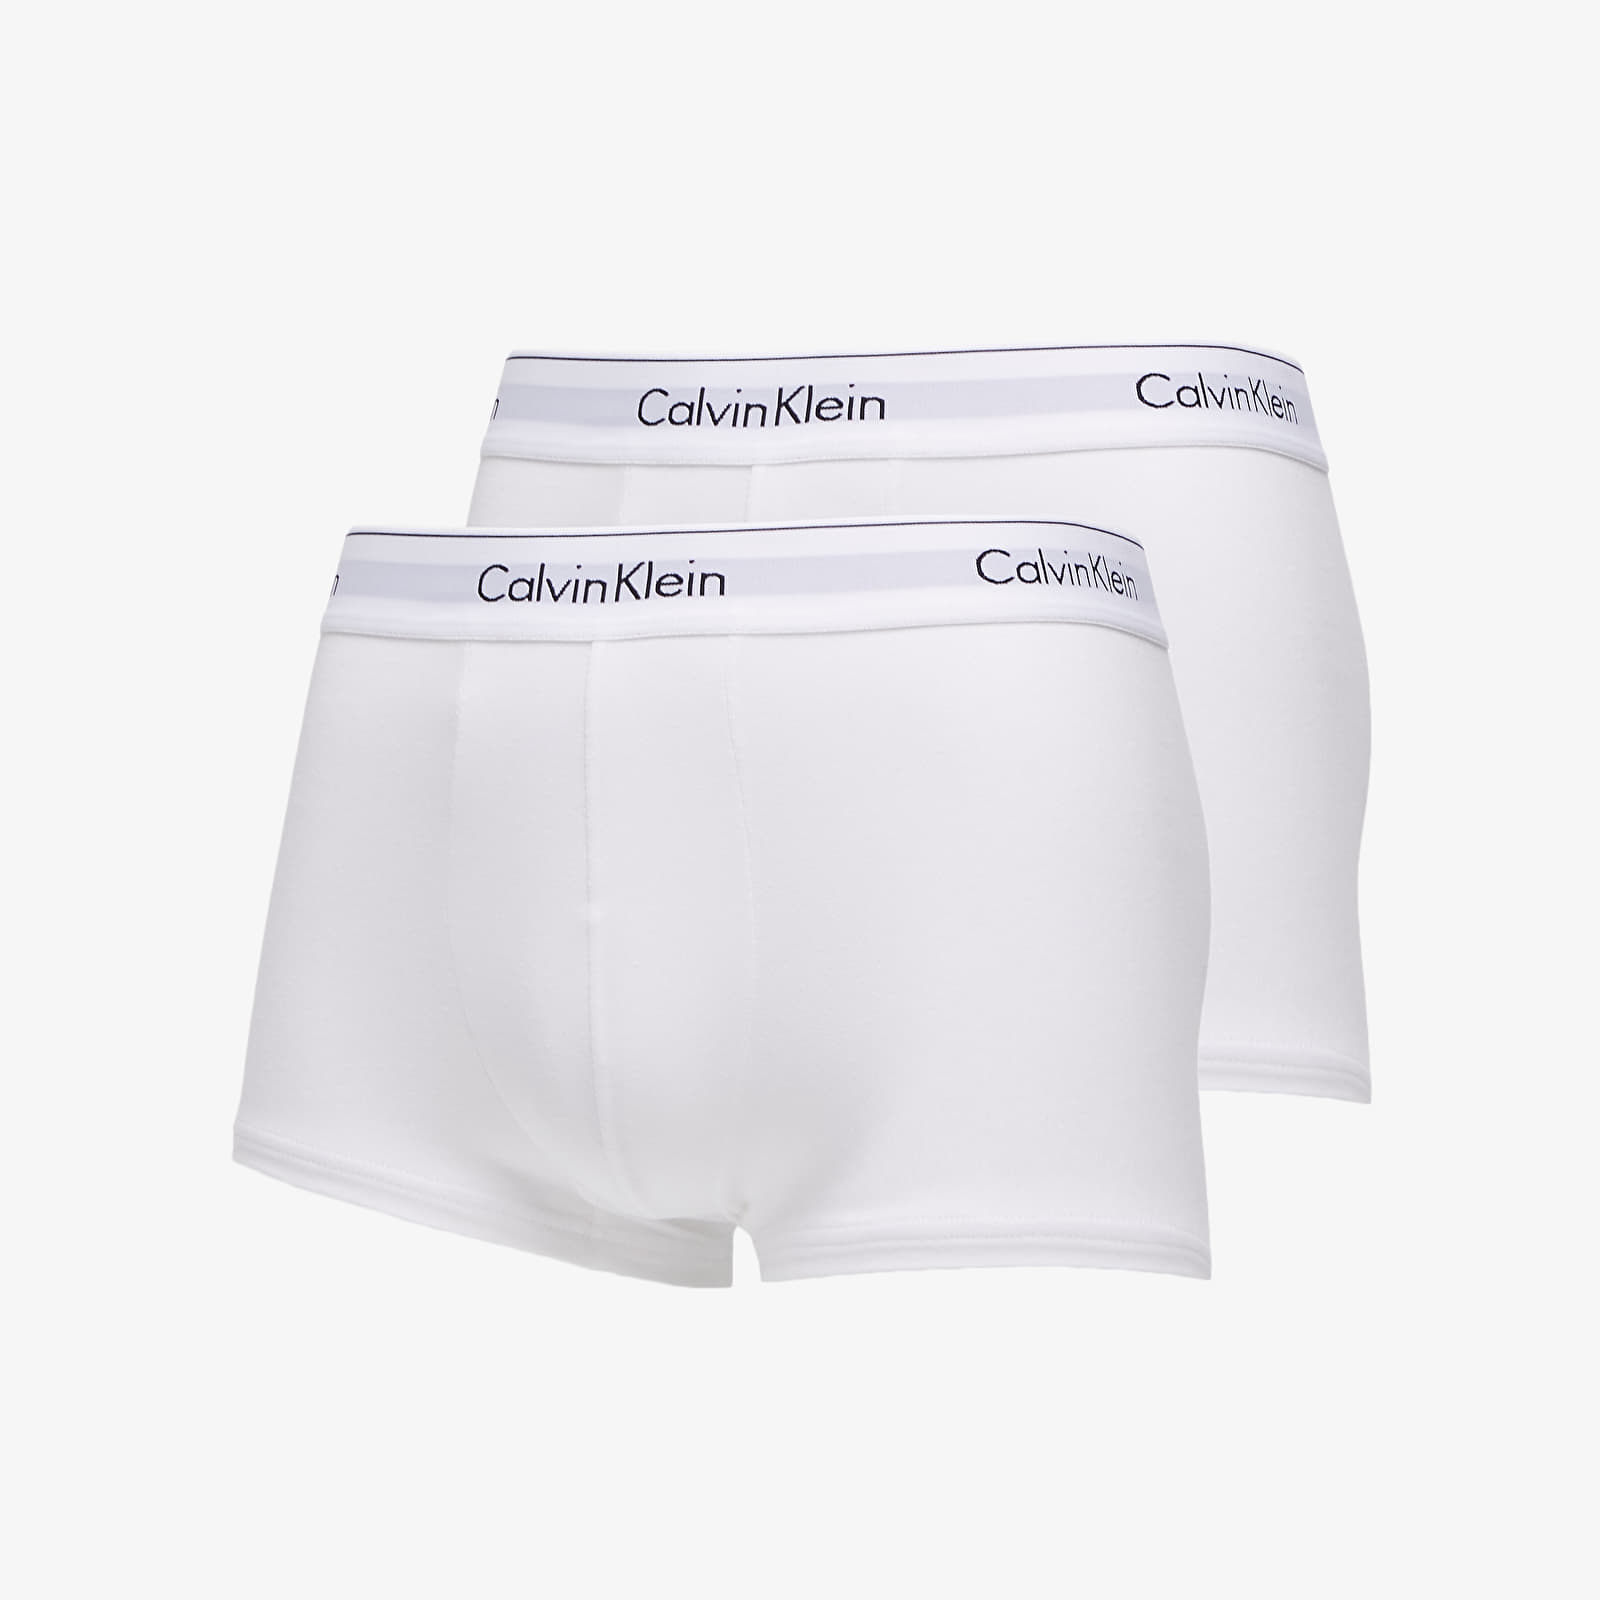 Boxer shorts Calvin Klein 2 Pack Trunks Modern Cotton Stretch White